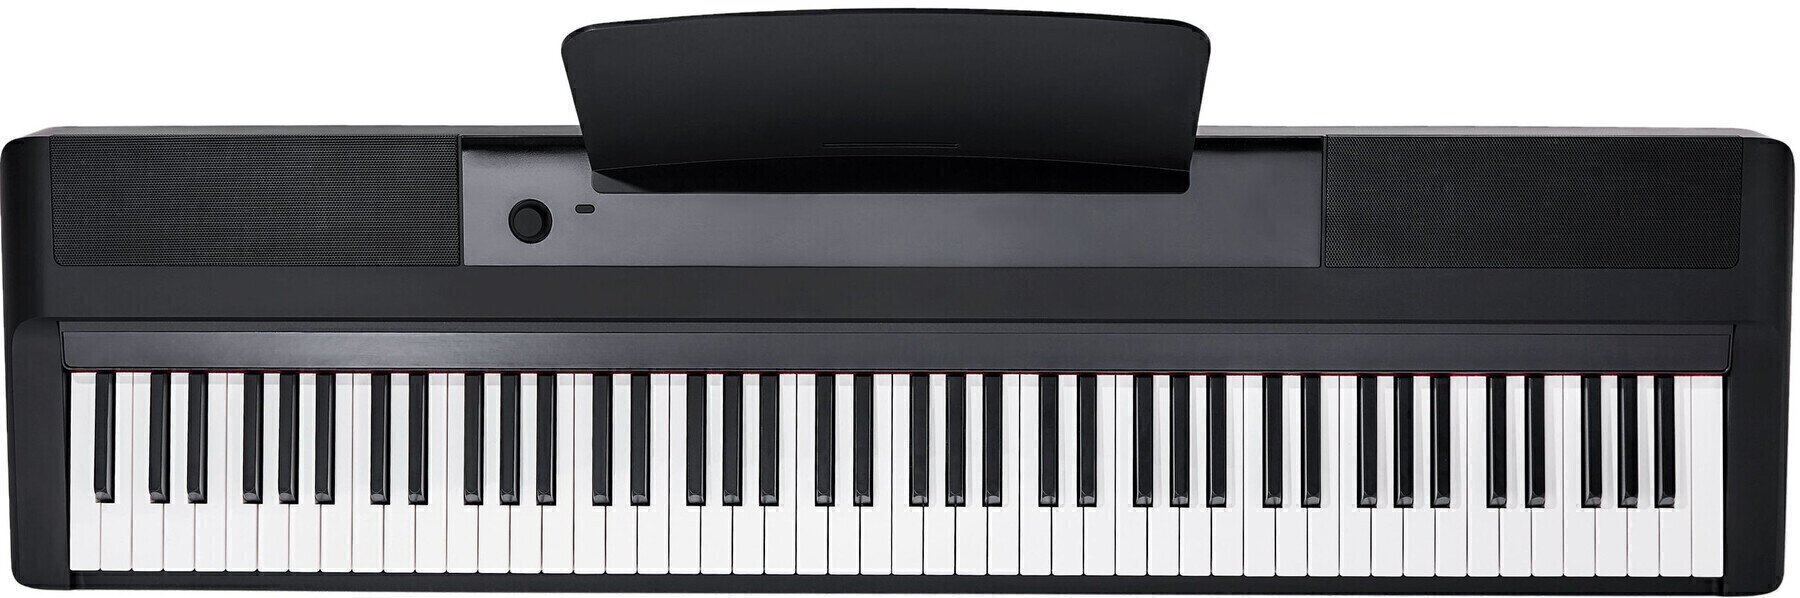 Clavier dynamique The ONE SP-NEX Smart Keyboard